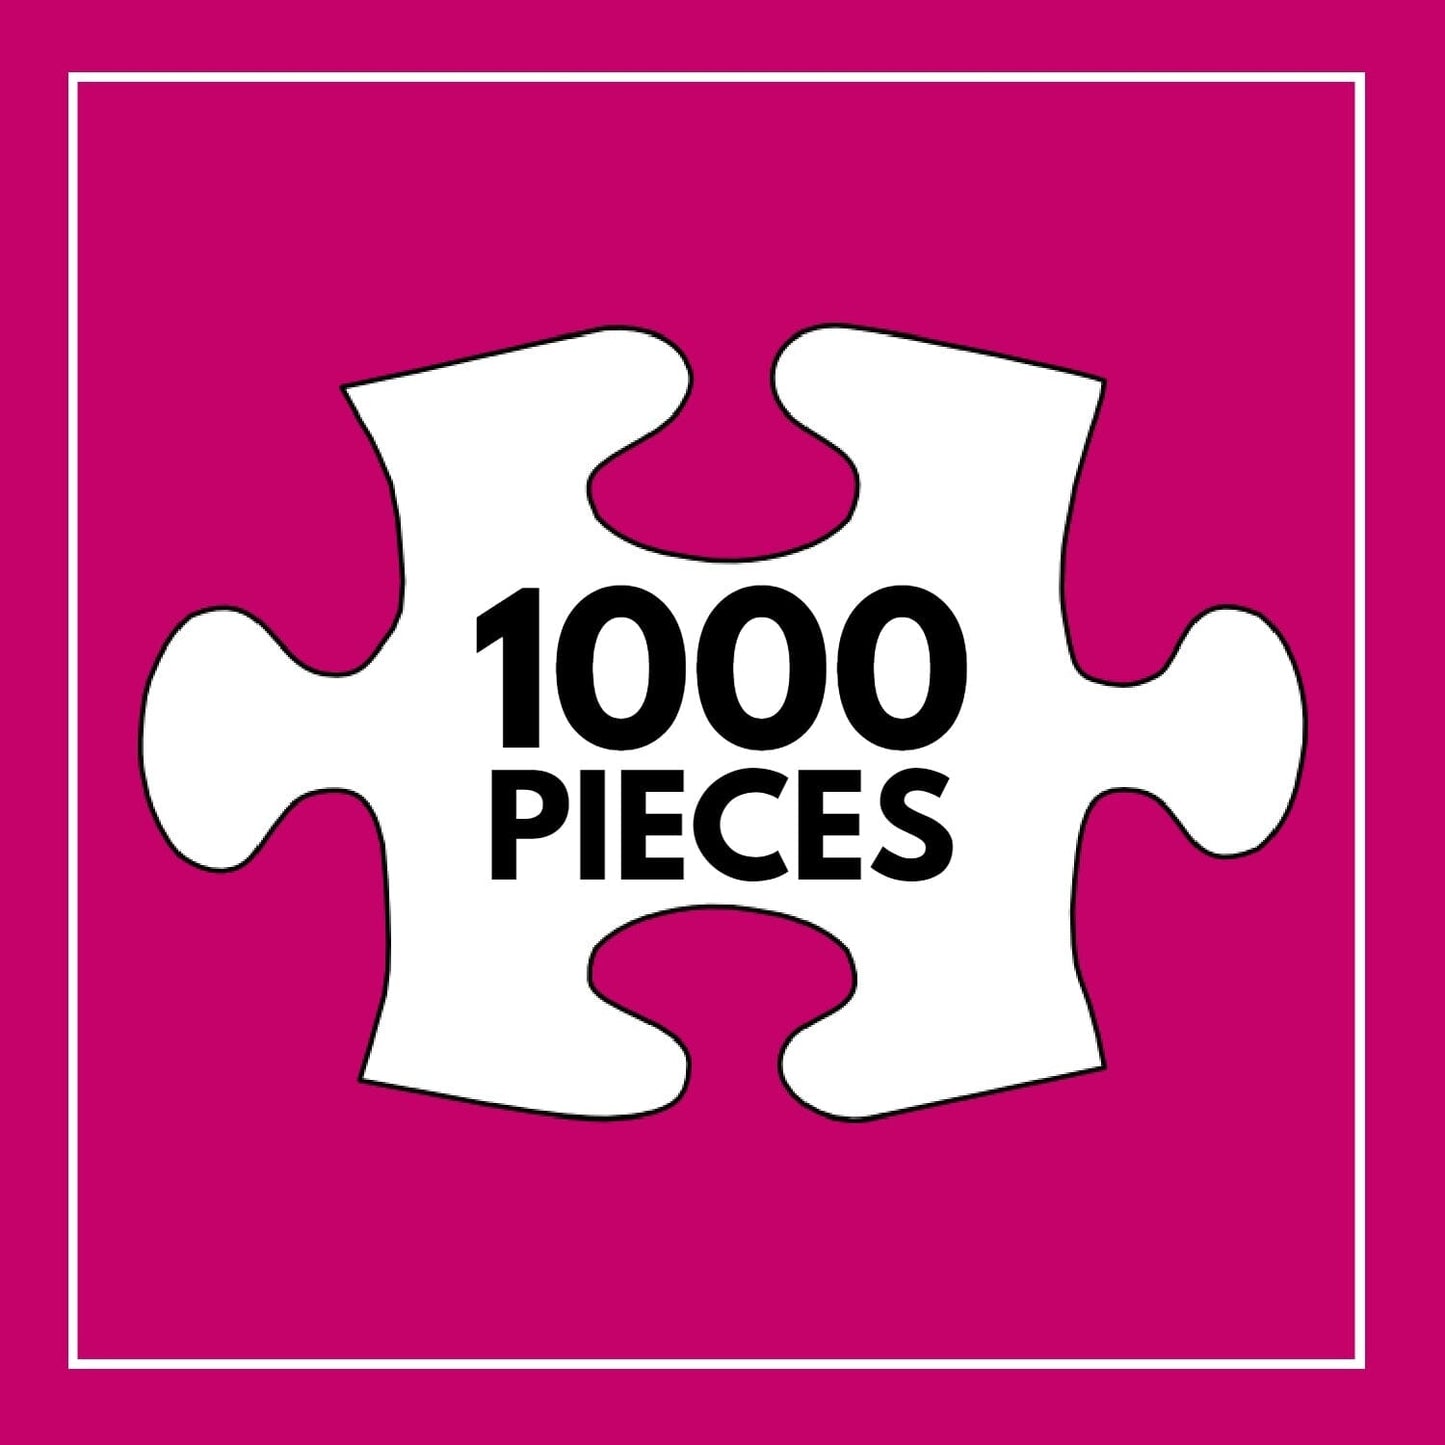 Golden Peony Dreams - 1000 Piece Jigsaw Puzzle Jigsaw Puzzles Cross & Glory